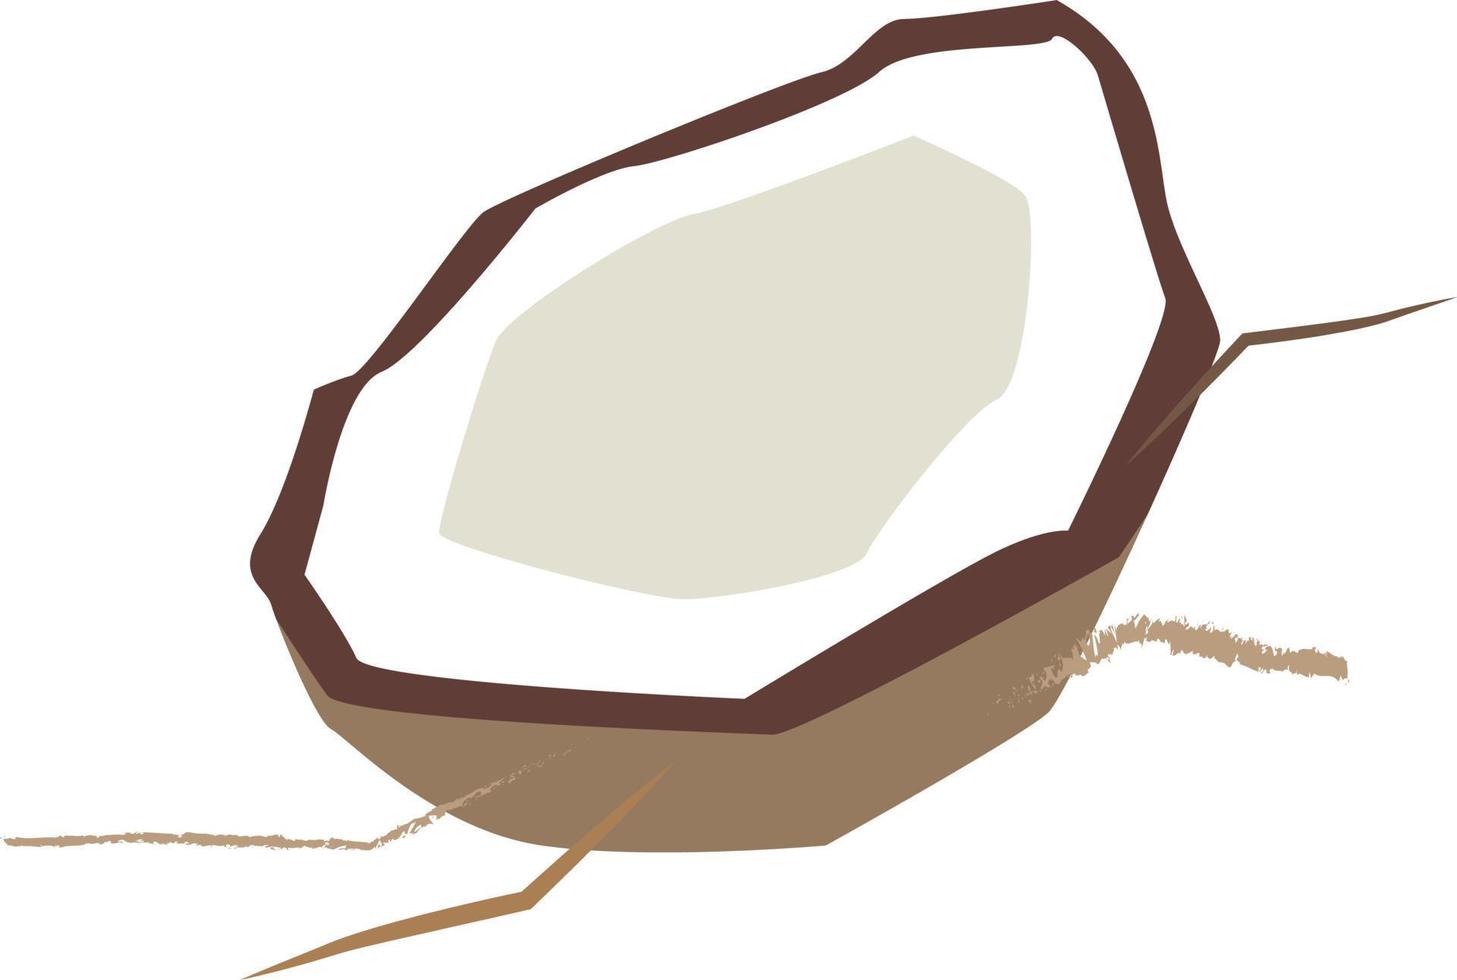 Coconut, illustration, vector on white background.